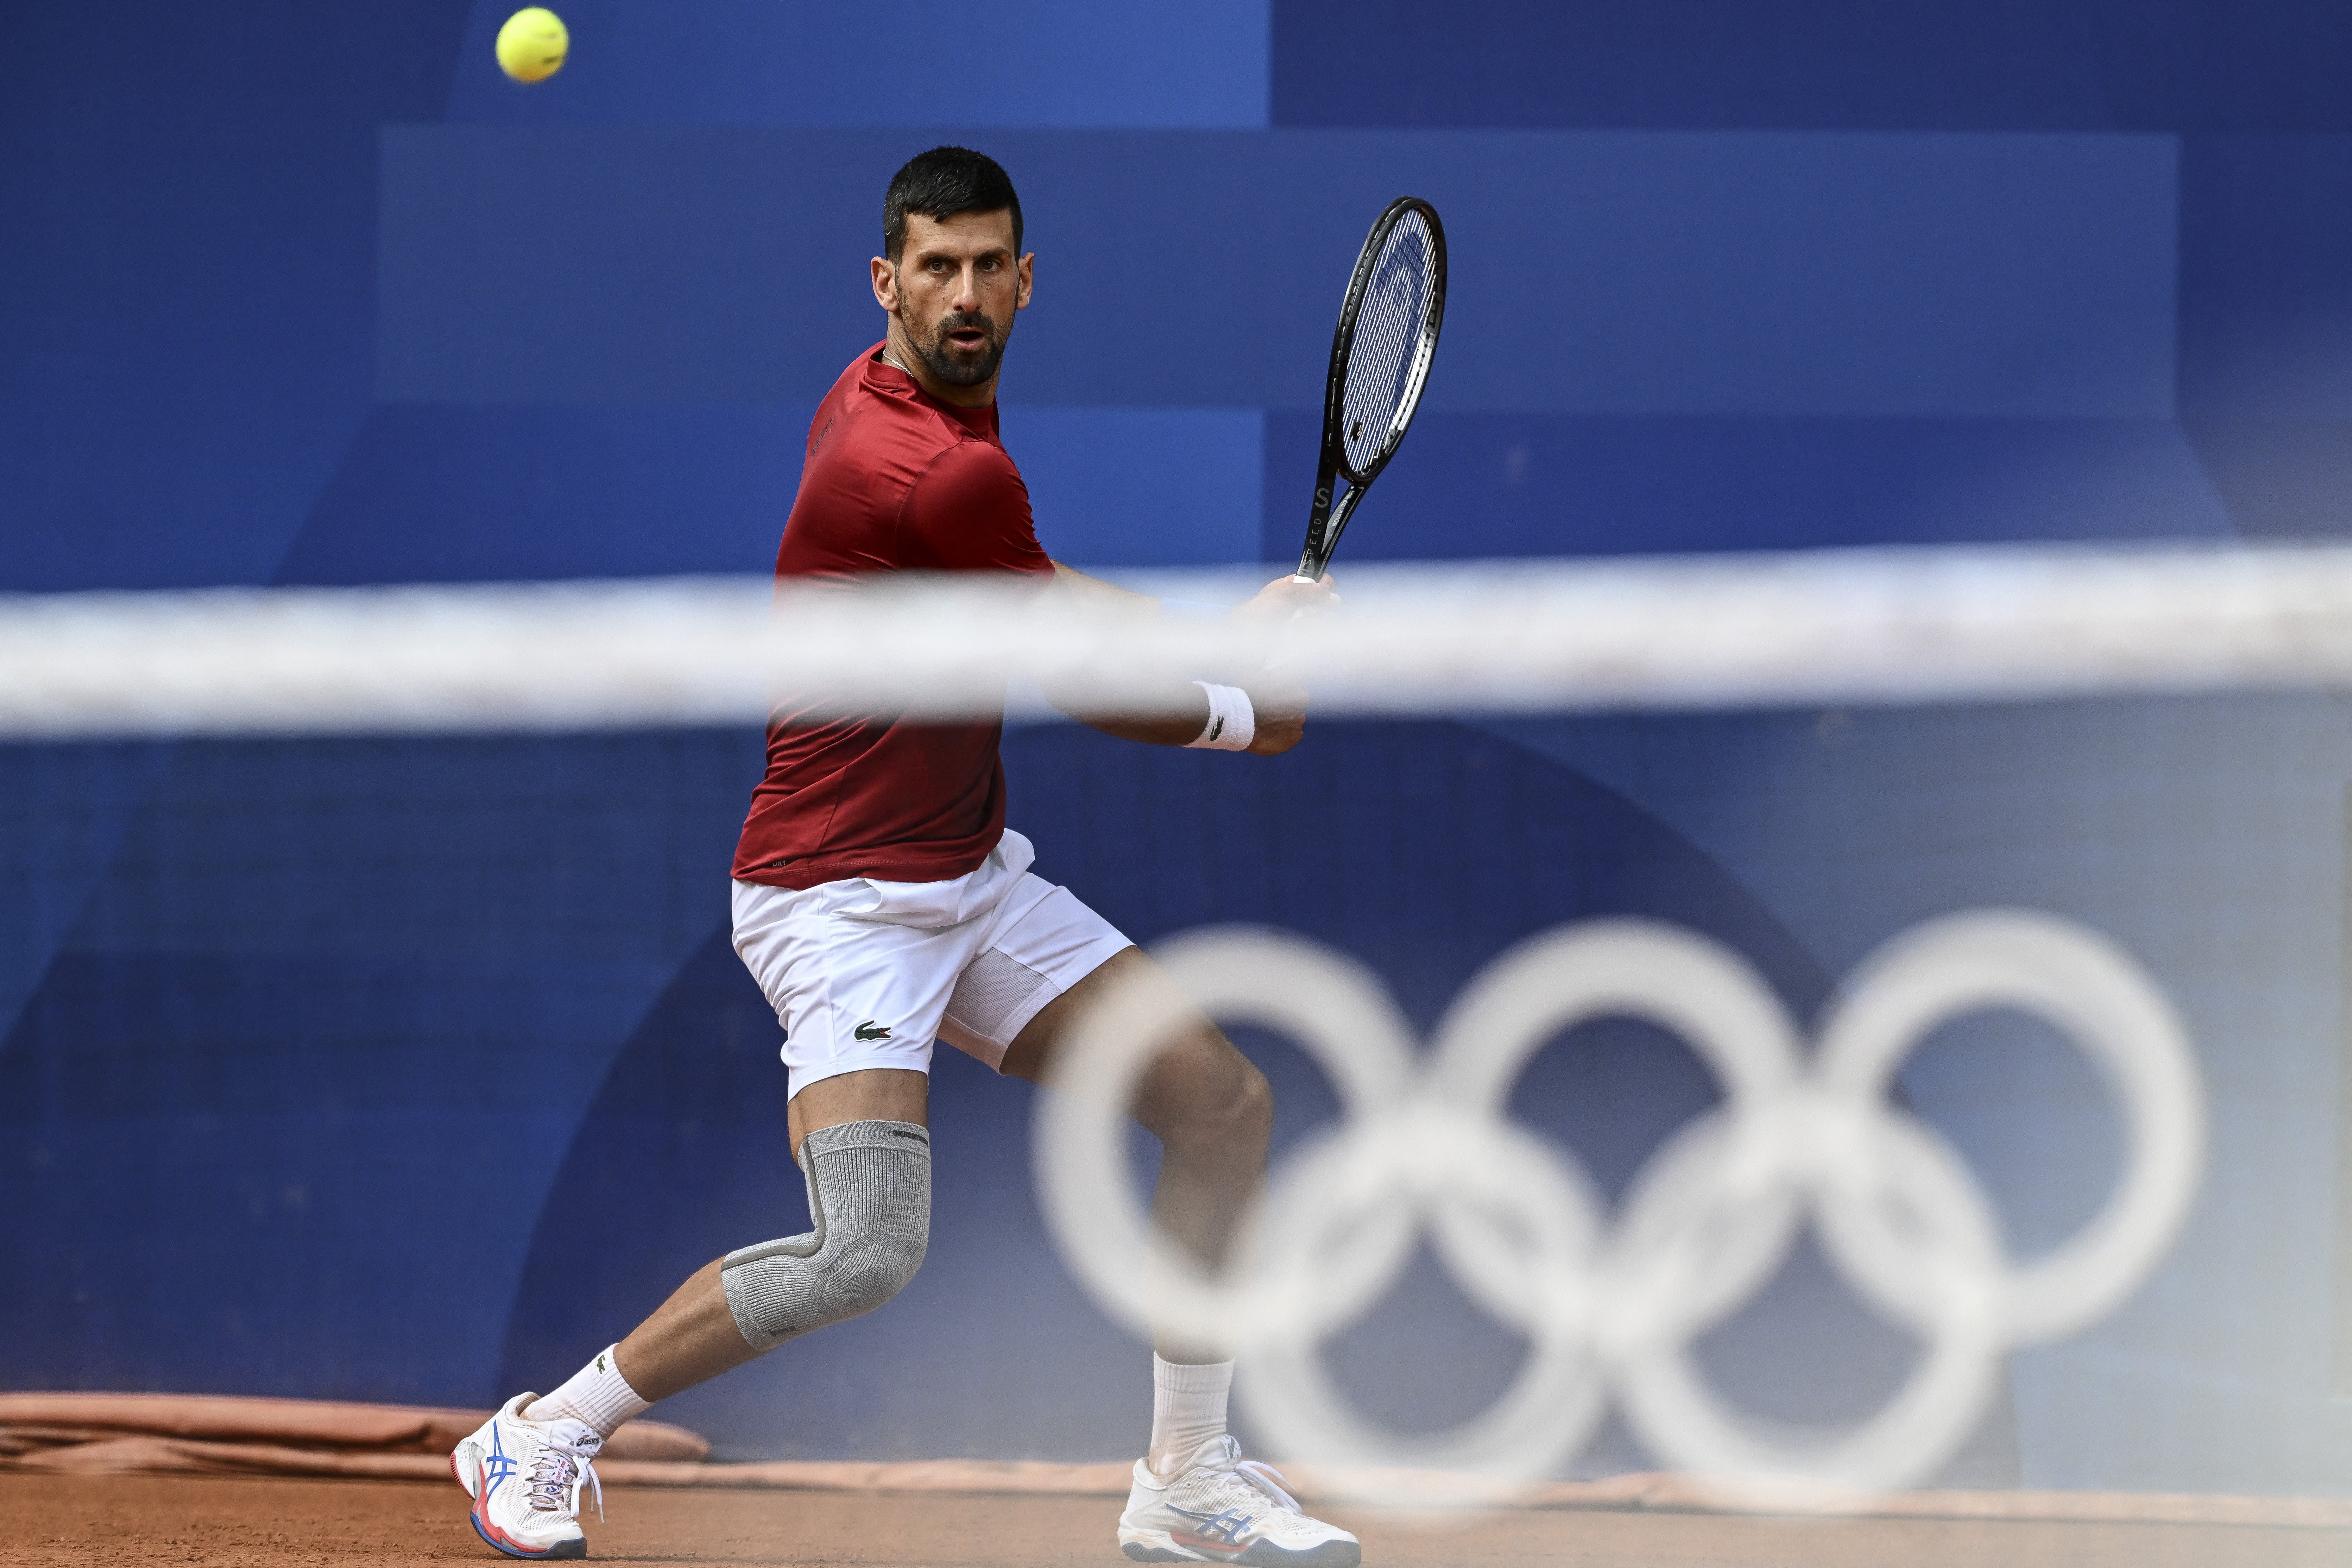 How to watch Novak Djokovic at Paris 2024 online for free